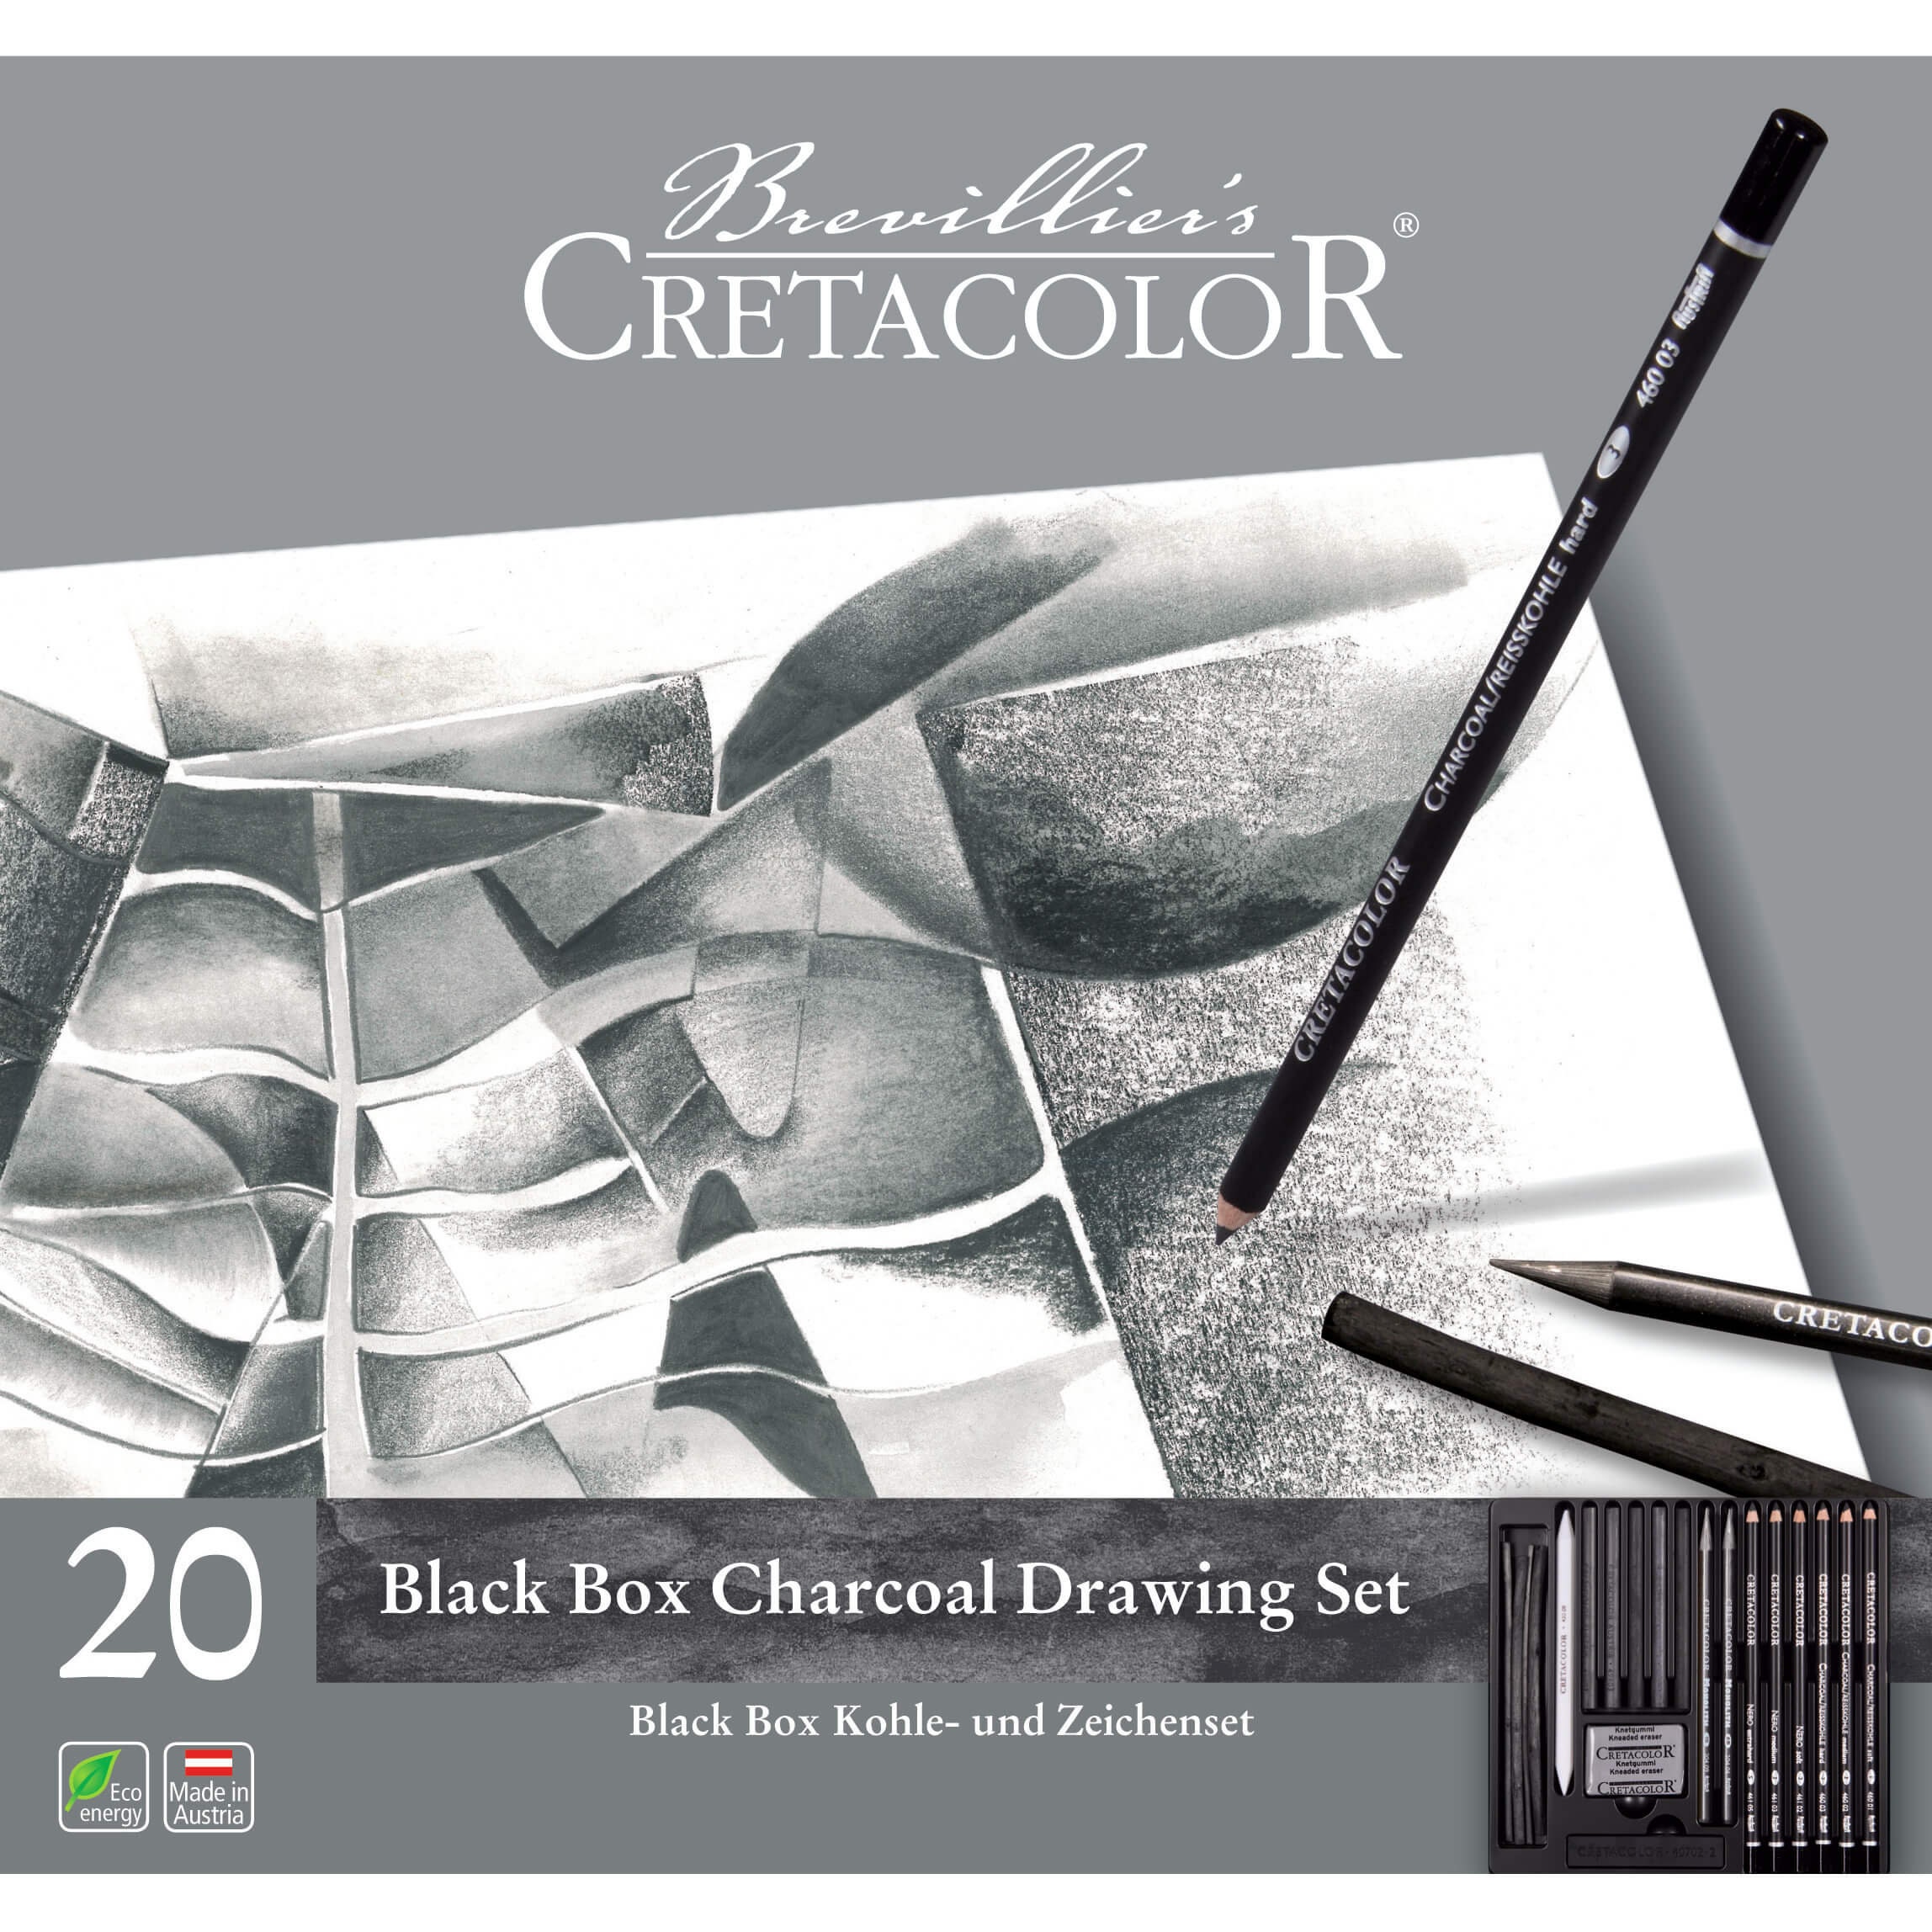 Black Box Charcoal Drawing Set 